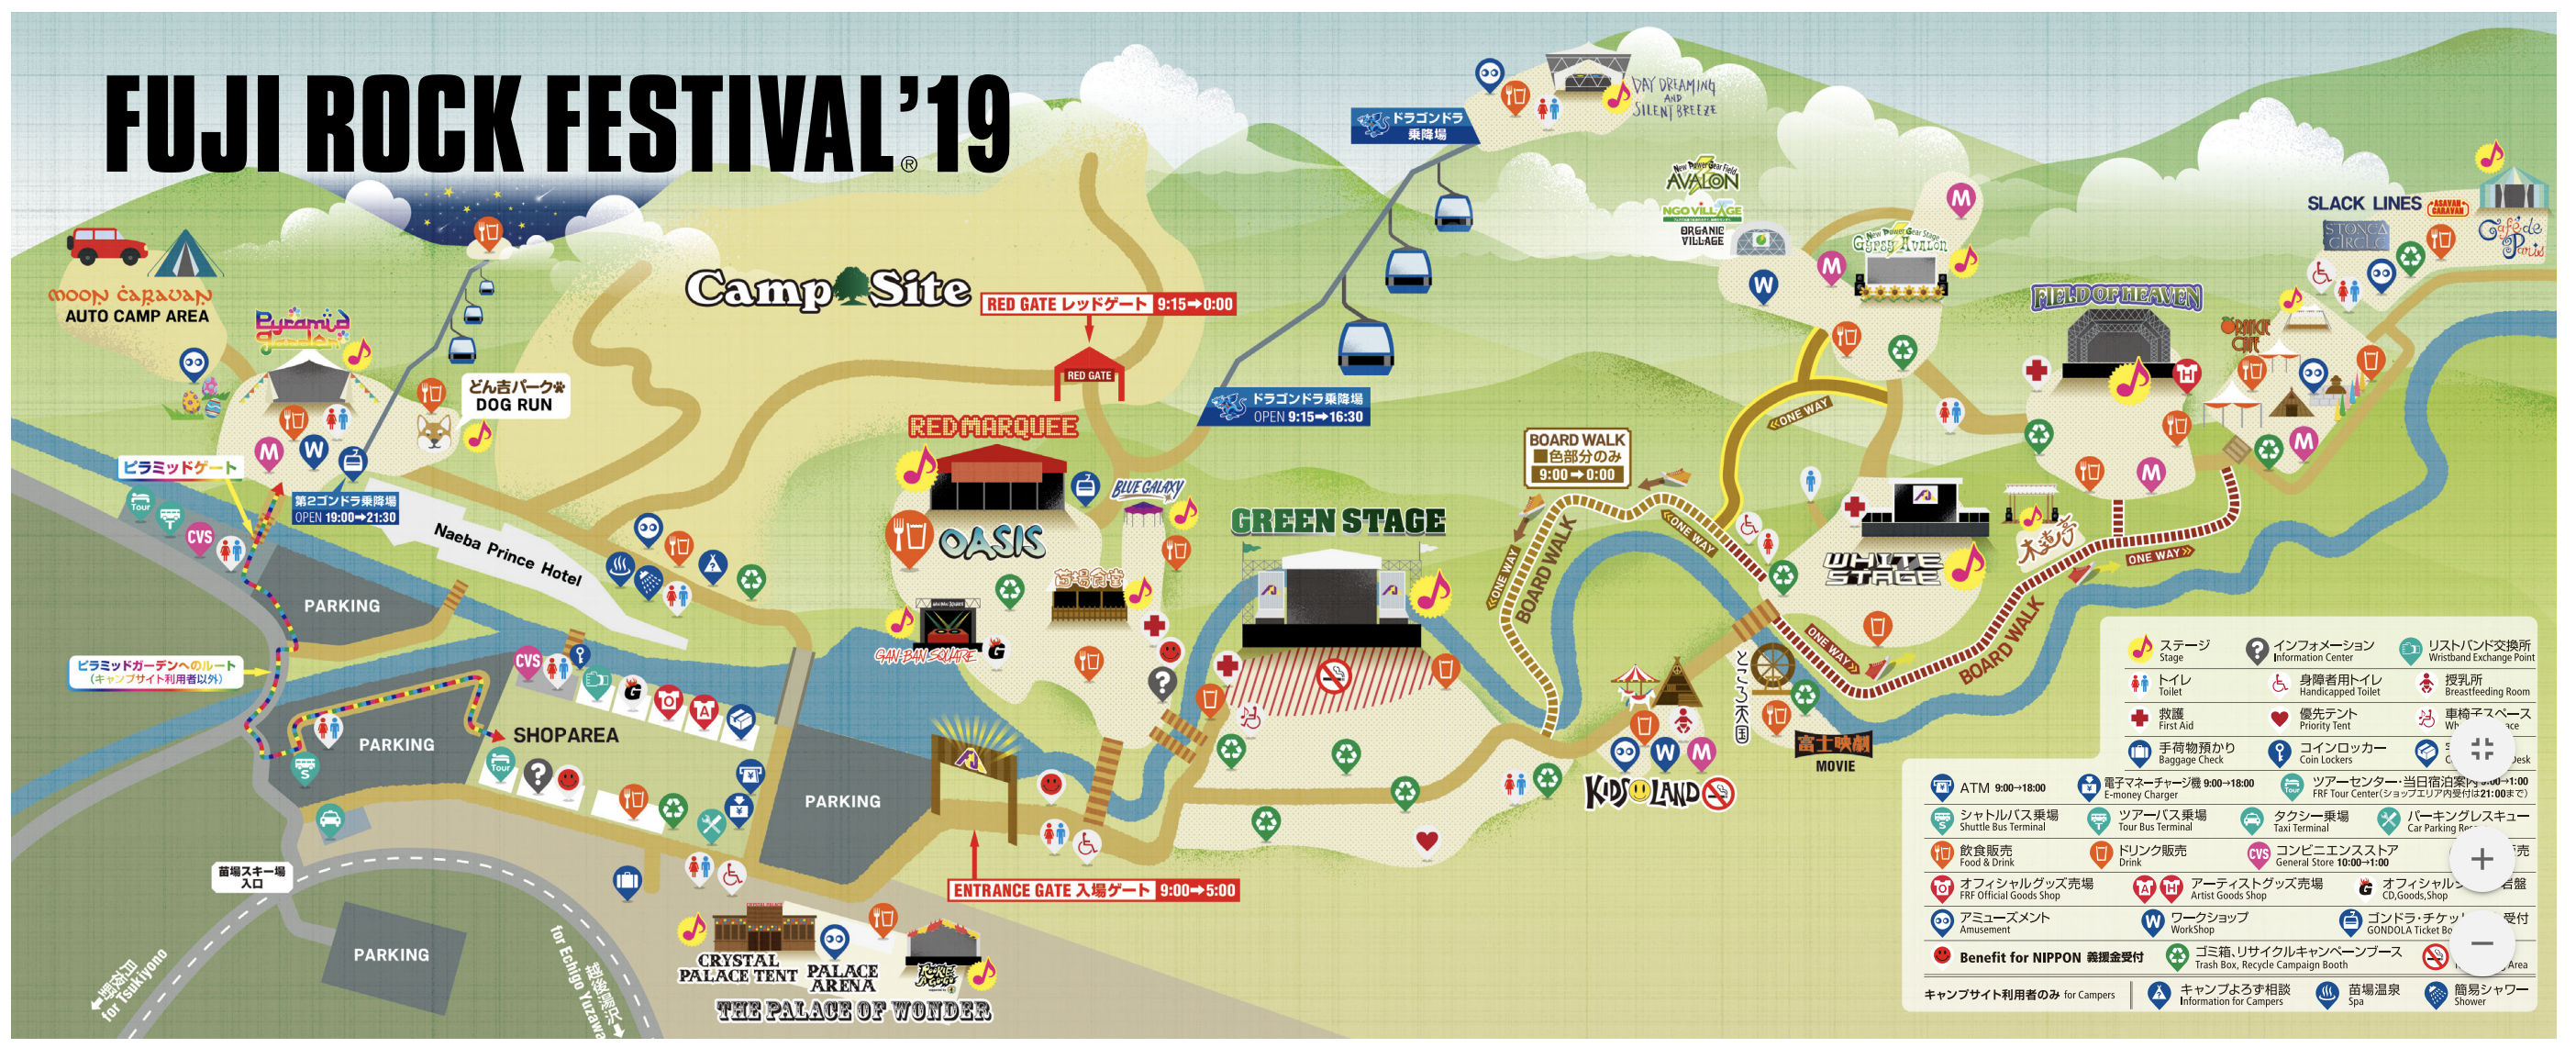 Fuji Rock Festival 2019 Stage Map